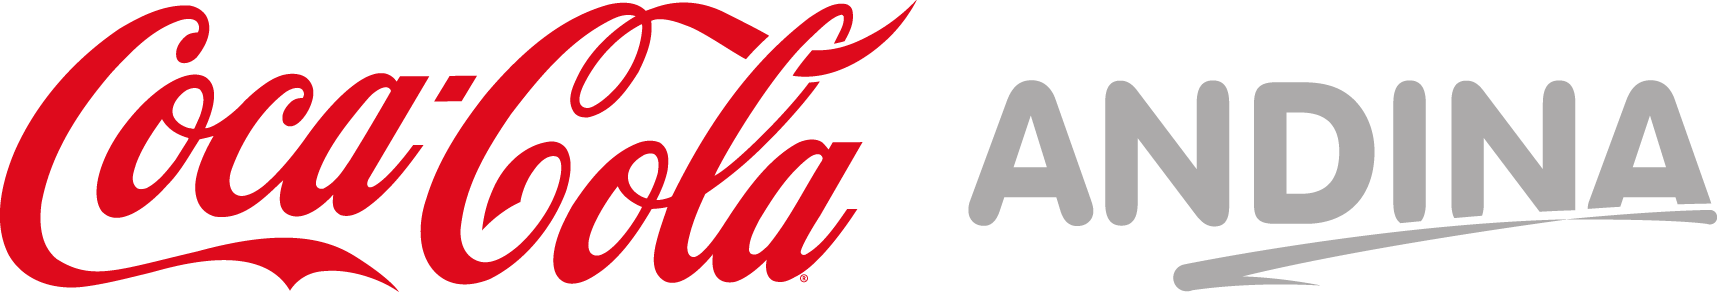 Logotipo corporativo